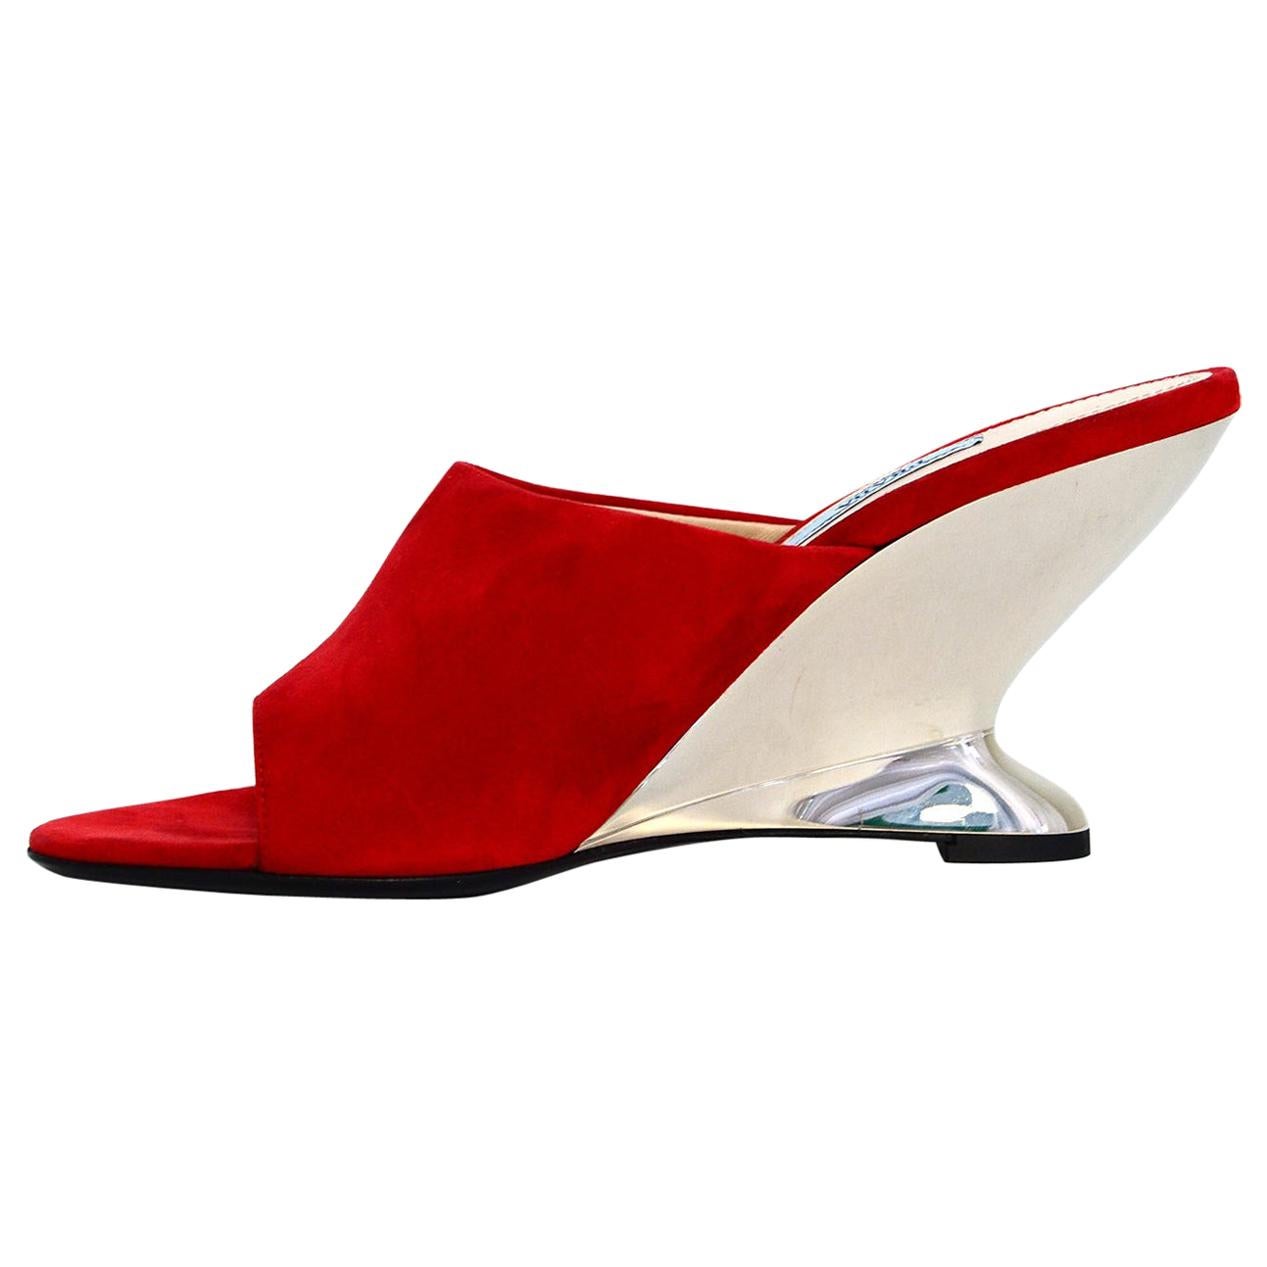 Prada Red Sculptural Metallic Wedge Heel Mules sz 39.5 rt $850